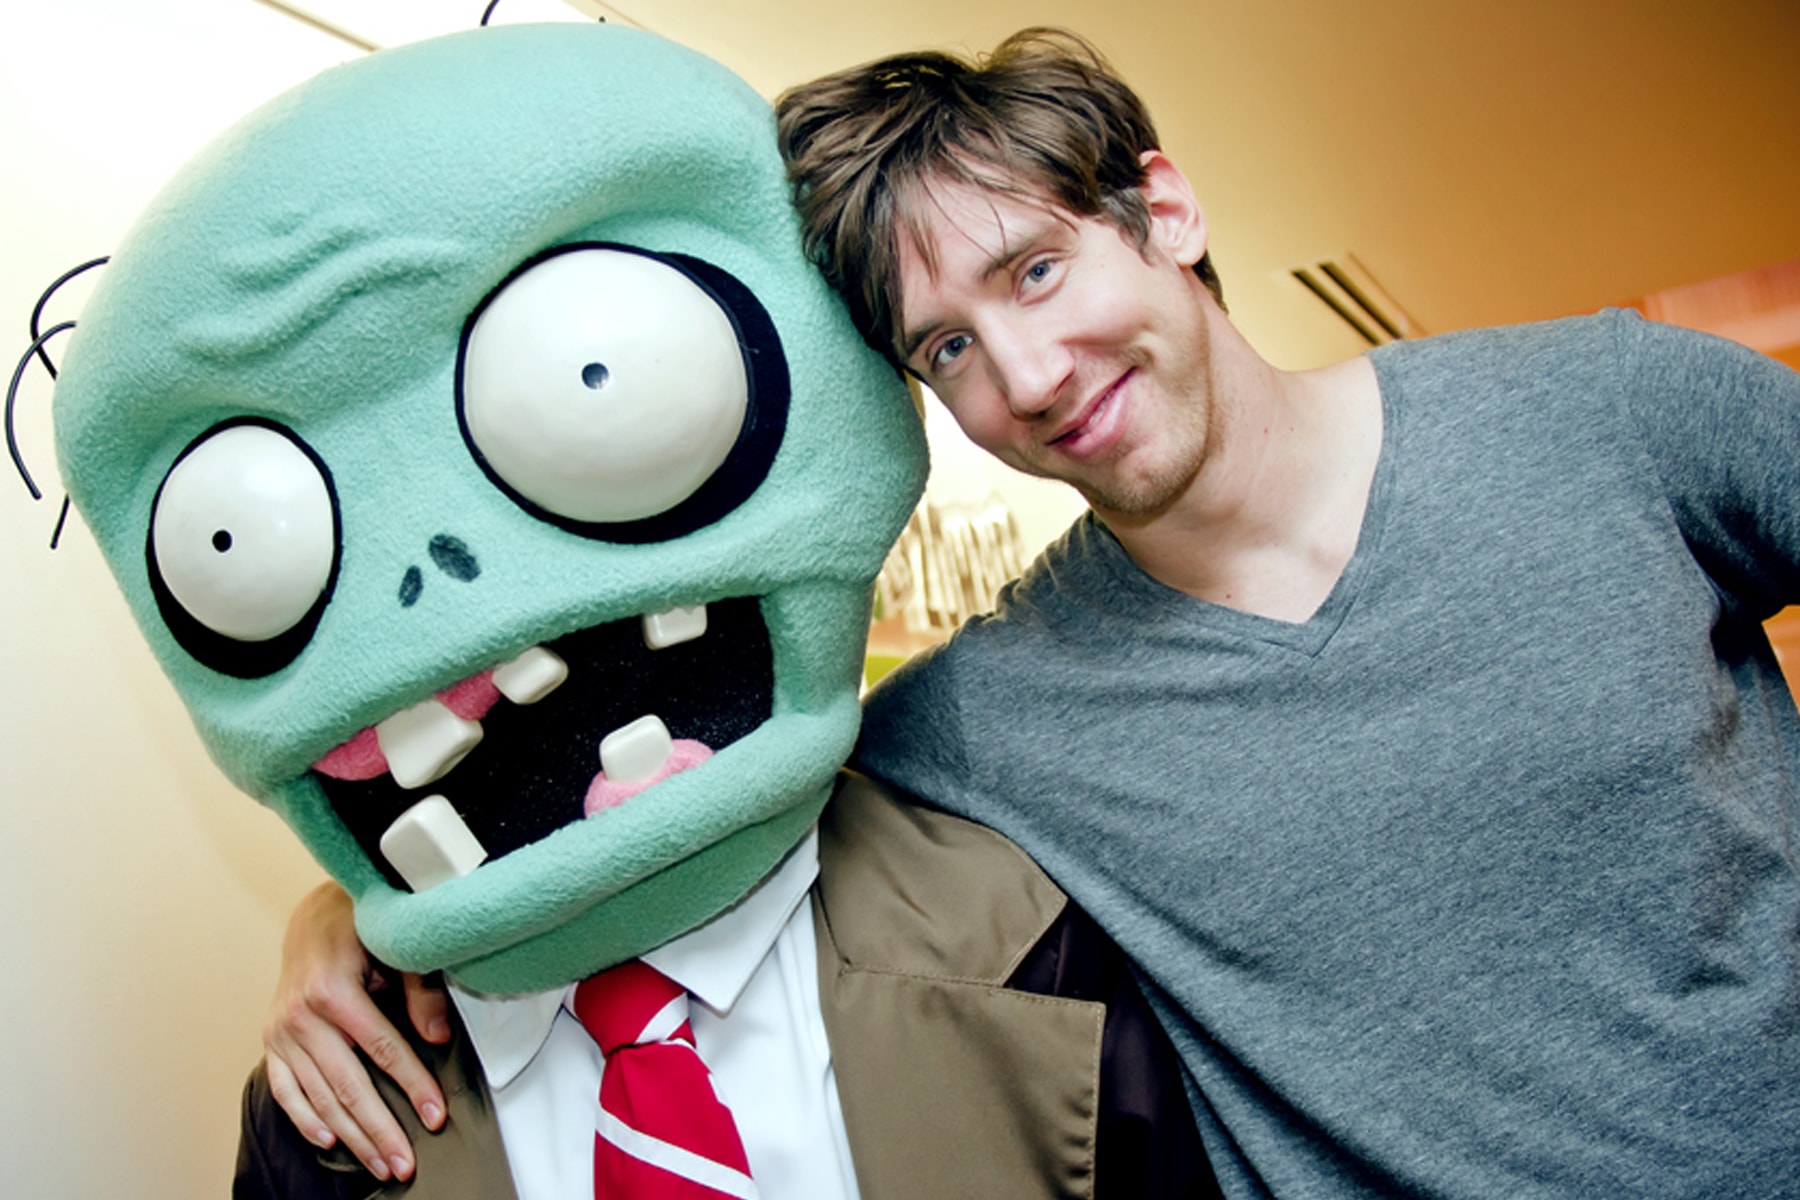 Mark Barrett smiling with his arm around the PopCap zombie mascot